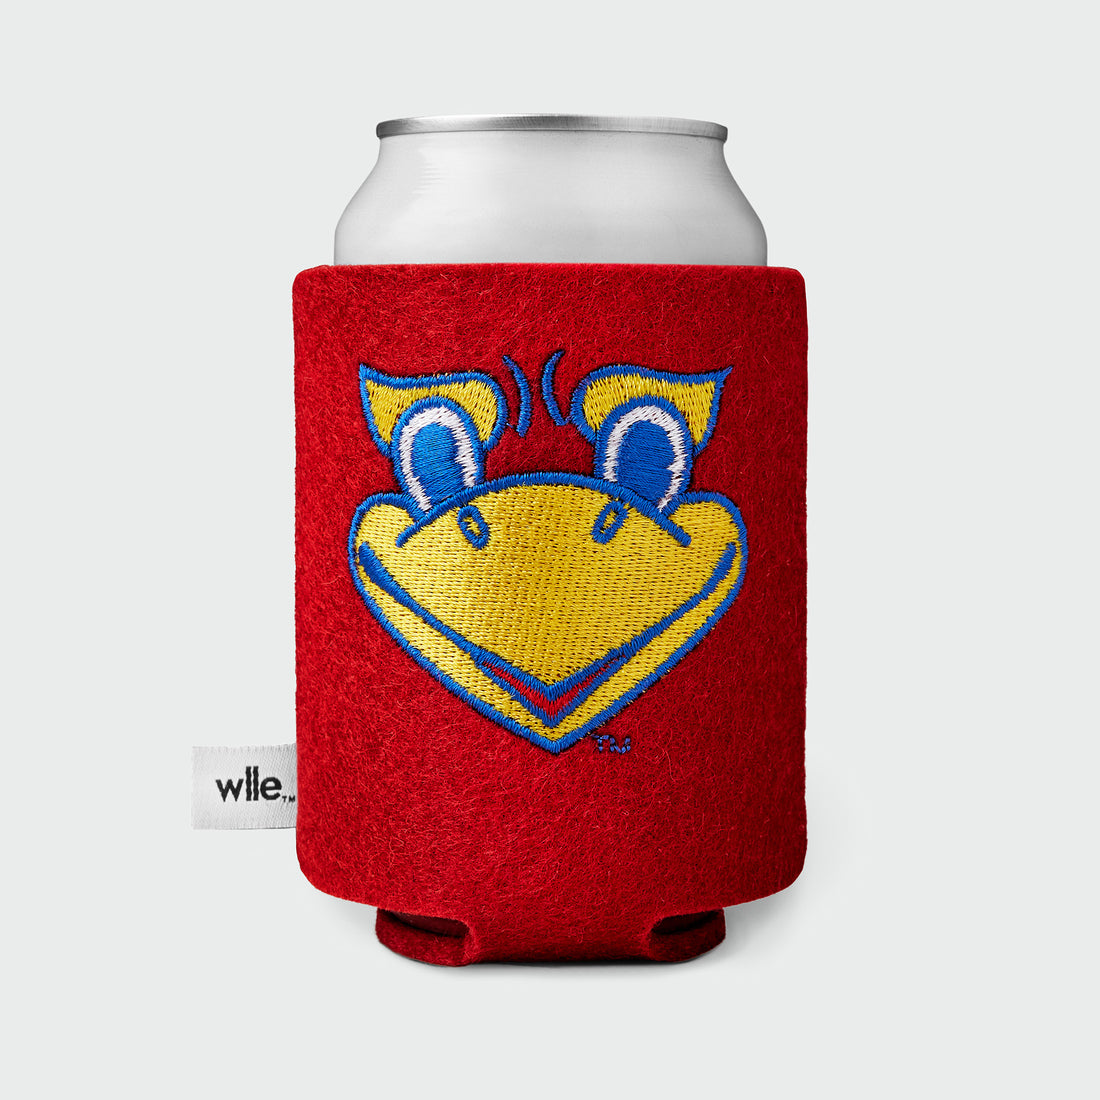 University of Kansas wlle™ Drink Sweater - Jayhawk Face - Cherry Red